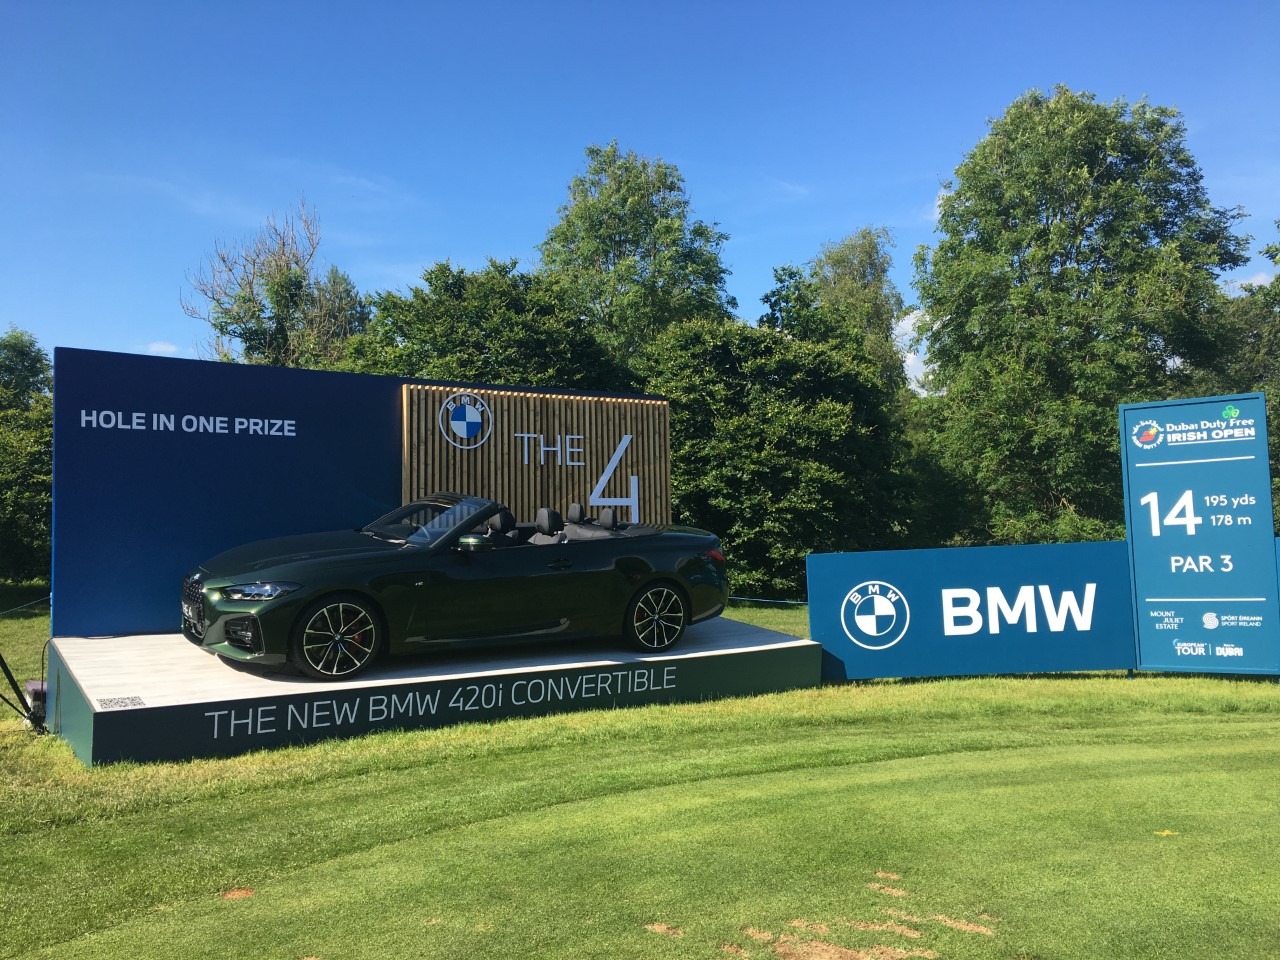 BMW 4 Series Convertible at the Irish Open